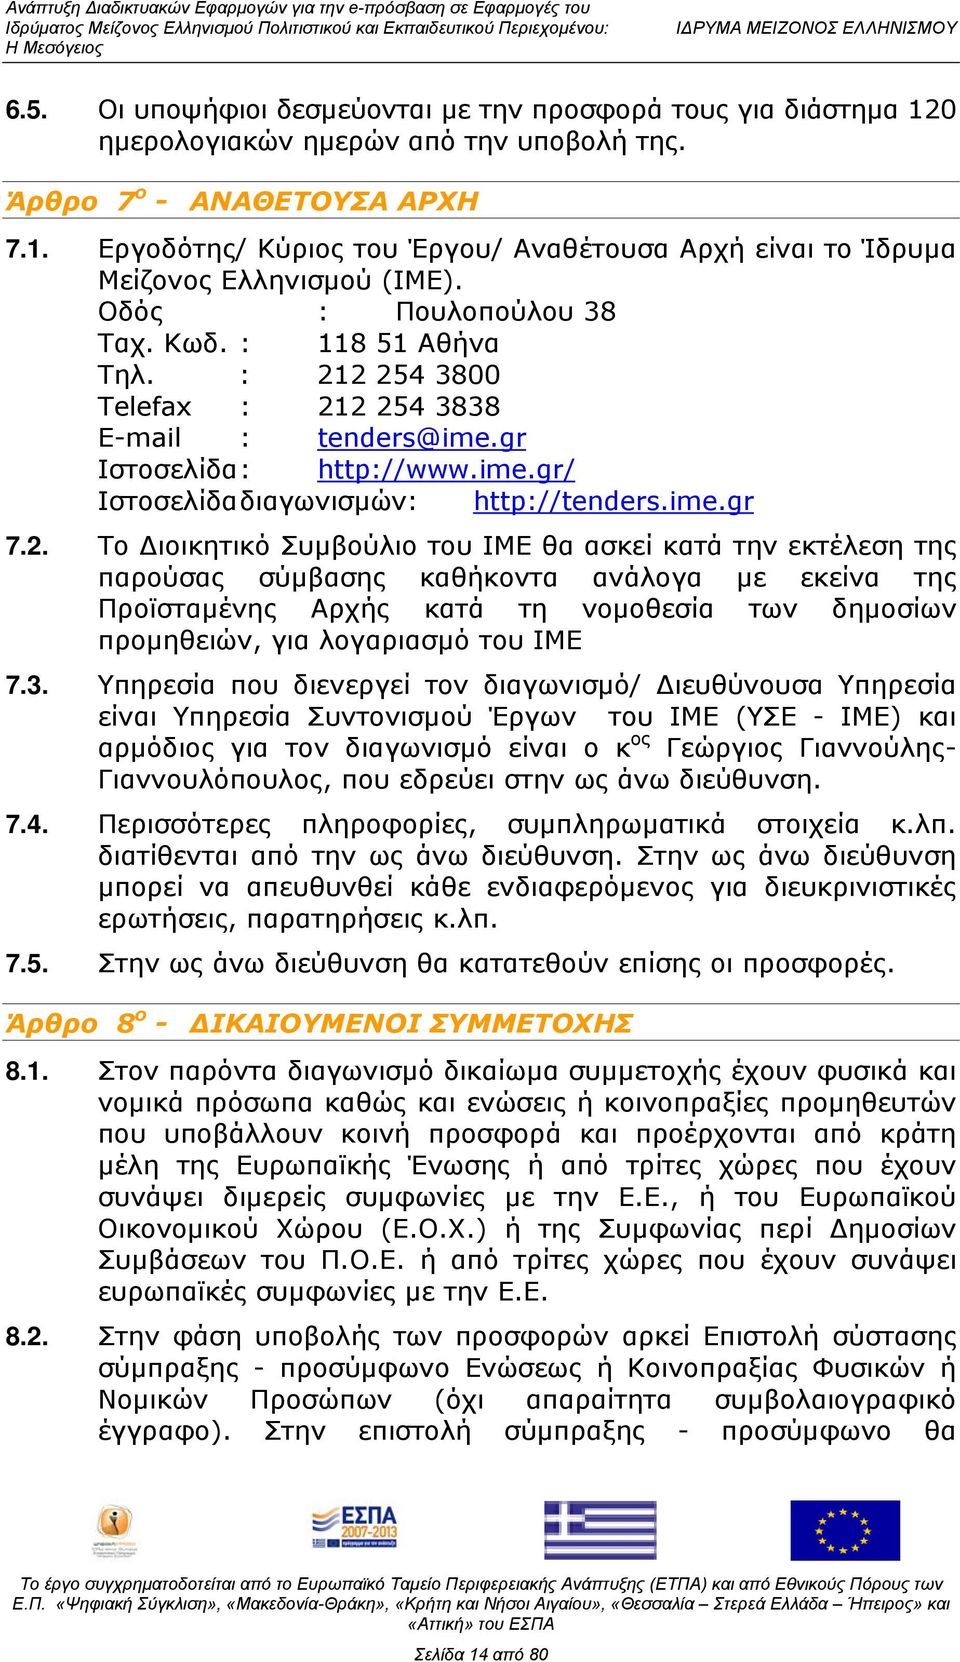 2 254 3800 Telefax : 212 254 3838 E-mail : tenders@ime.gr Ιστοσελίδα : http://www.ime.gr/ Ιστοσελίδα διαγωνισμών: http://tenders.ime.gr 7.2. Το Διοικητικό Συμβούλιο του ΙΜΕ θα ασκεί κατά την εκτέλεση